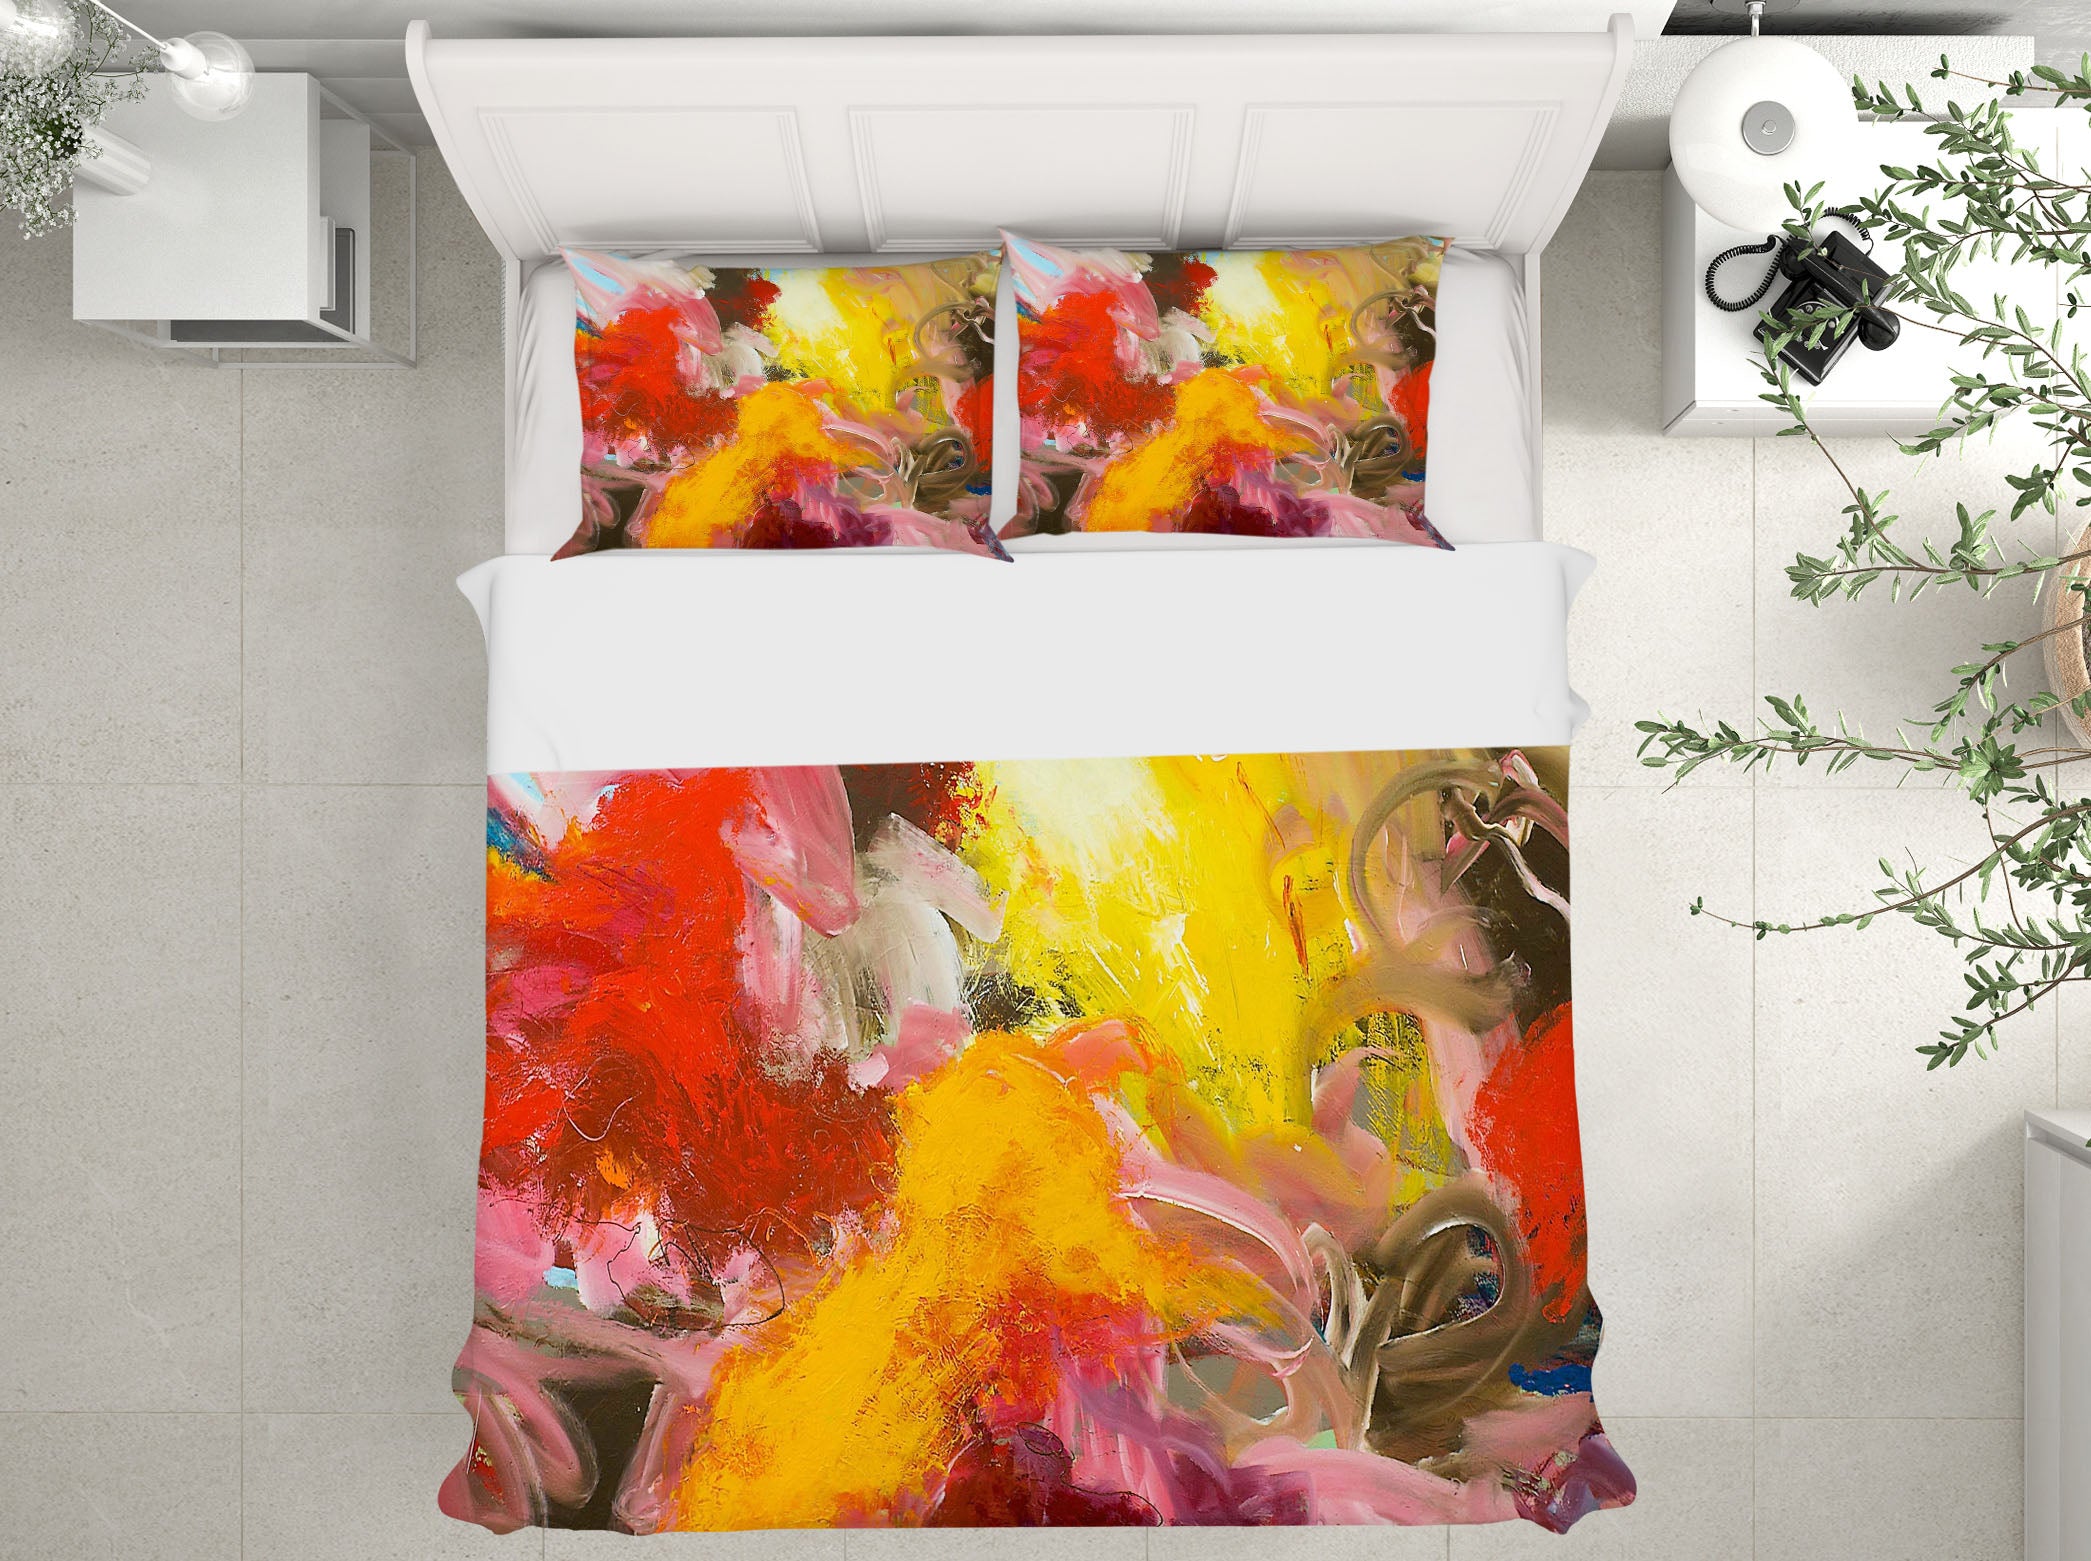 3D Color Painting 1040 Allan P. Friedlander Bedding Bed Pillowcases Quilt